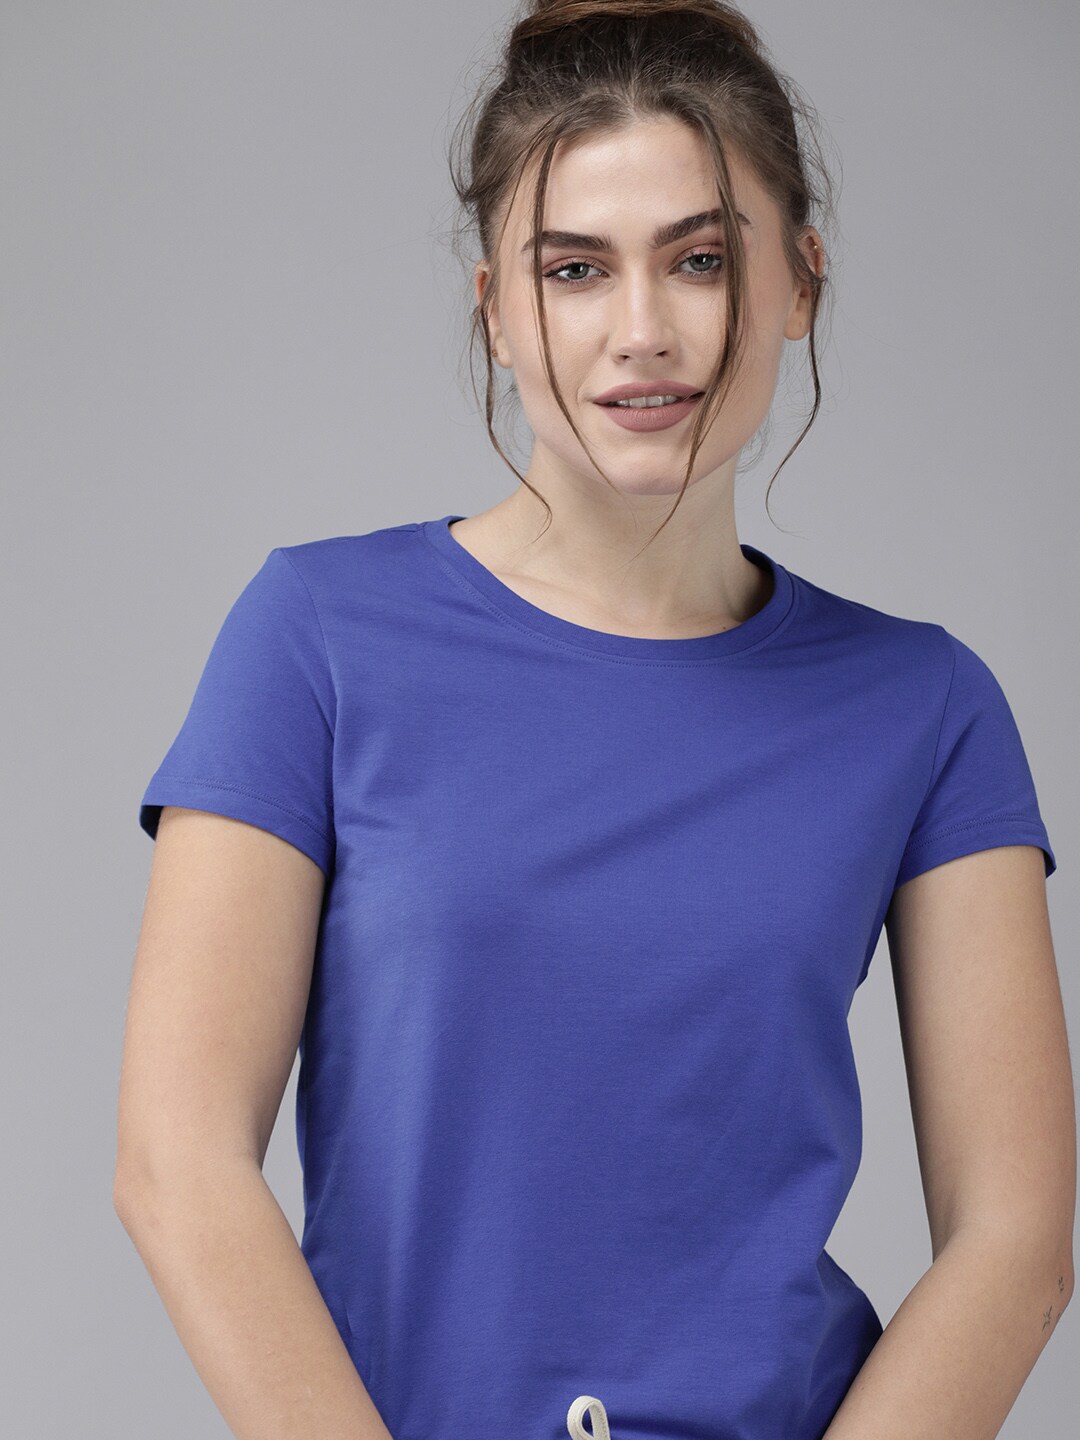 Van Heusen Women Blue Solid Lounge T-shirts Price in India